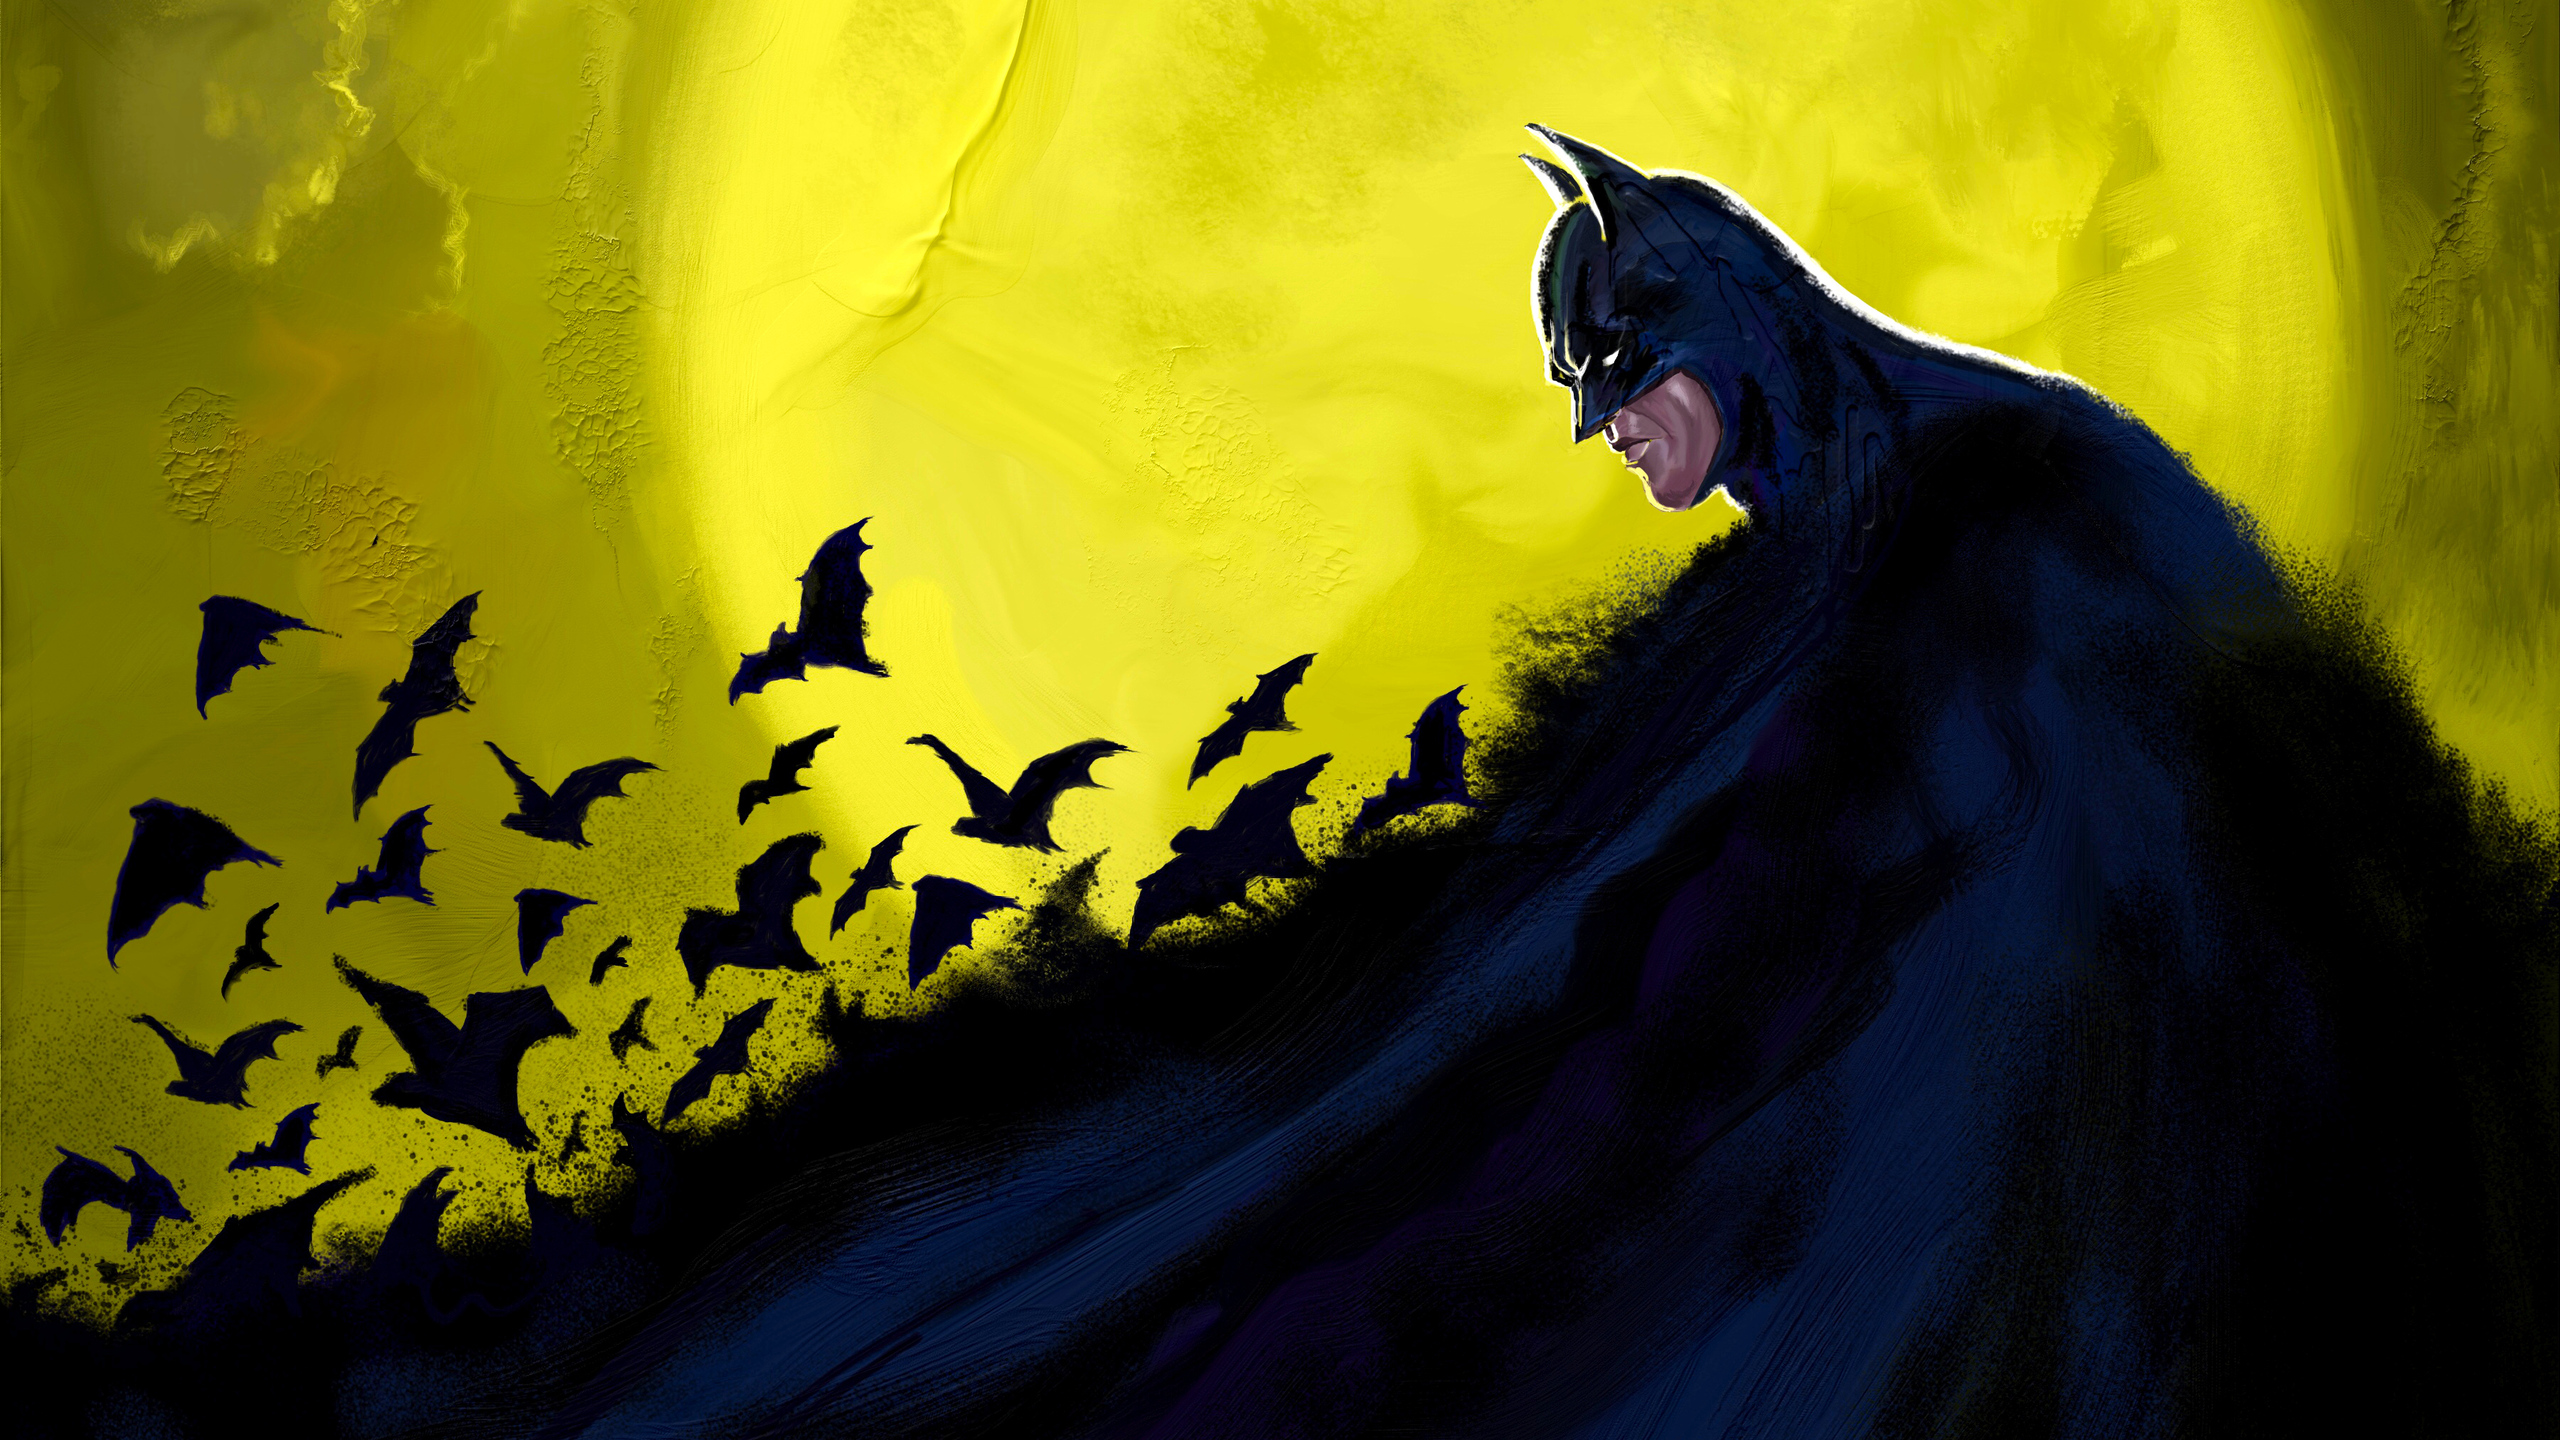 4k Batman Cape Bats 1440P Resolution HD 4k Wallpaper, Image, Background, Photo and Picture